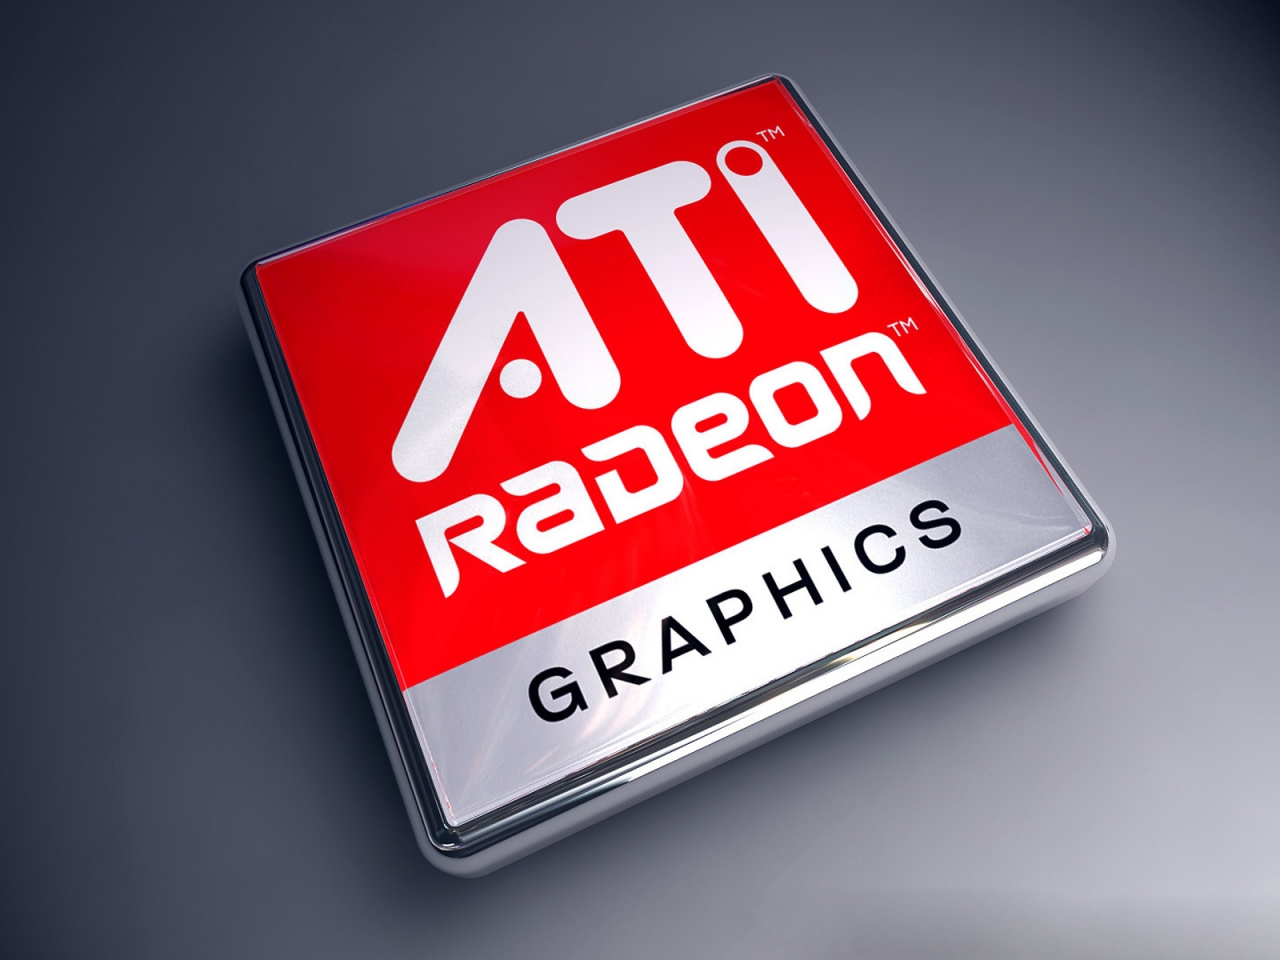 ATI Radeon Graphics for 1280 x 960 resolution